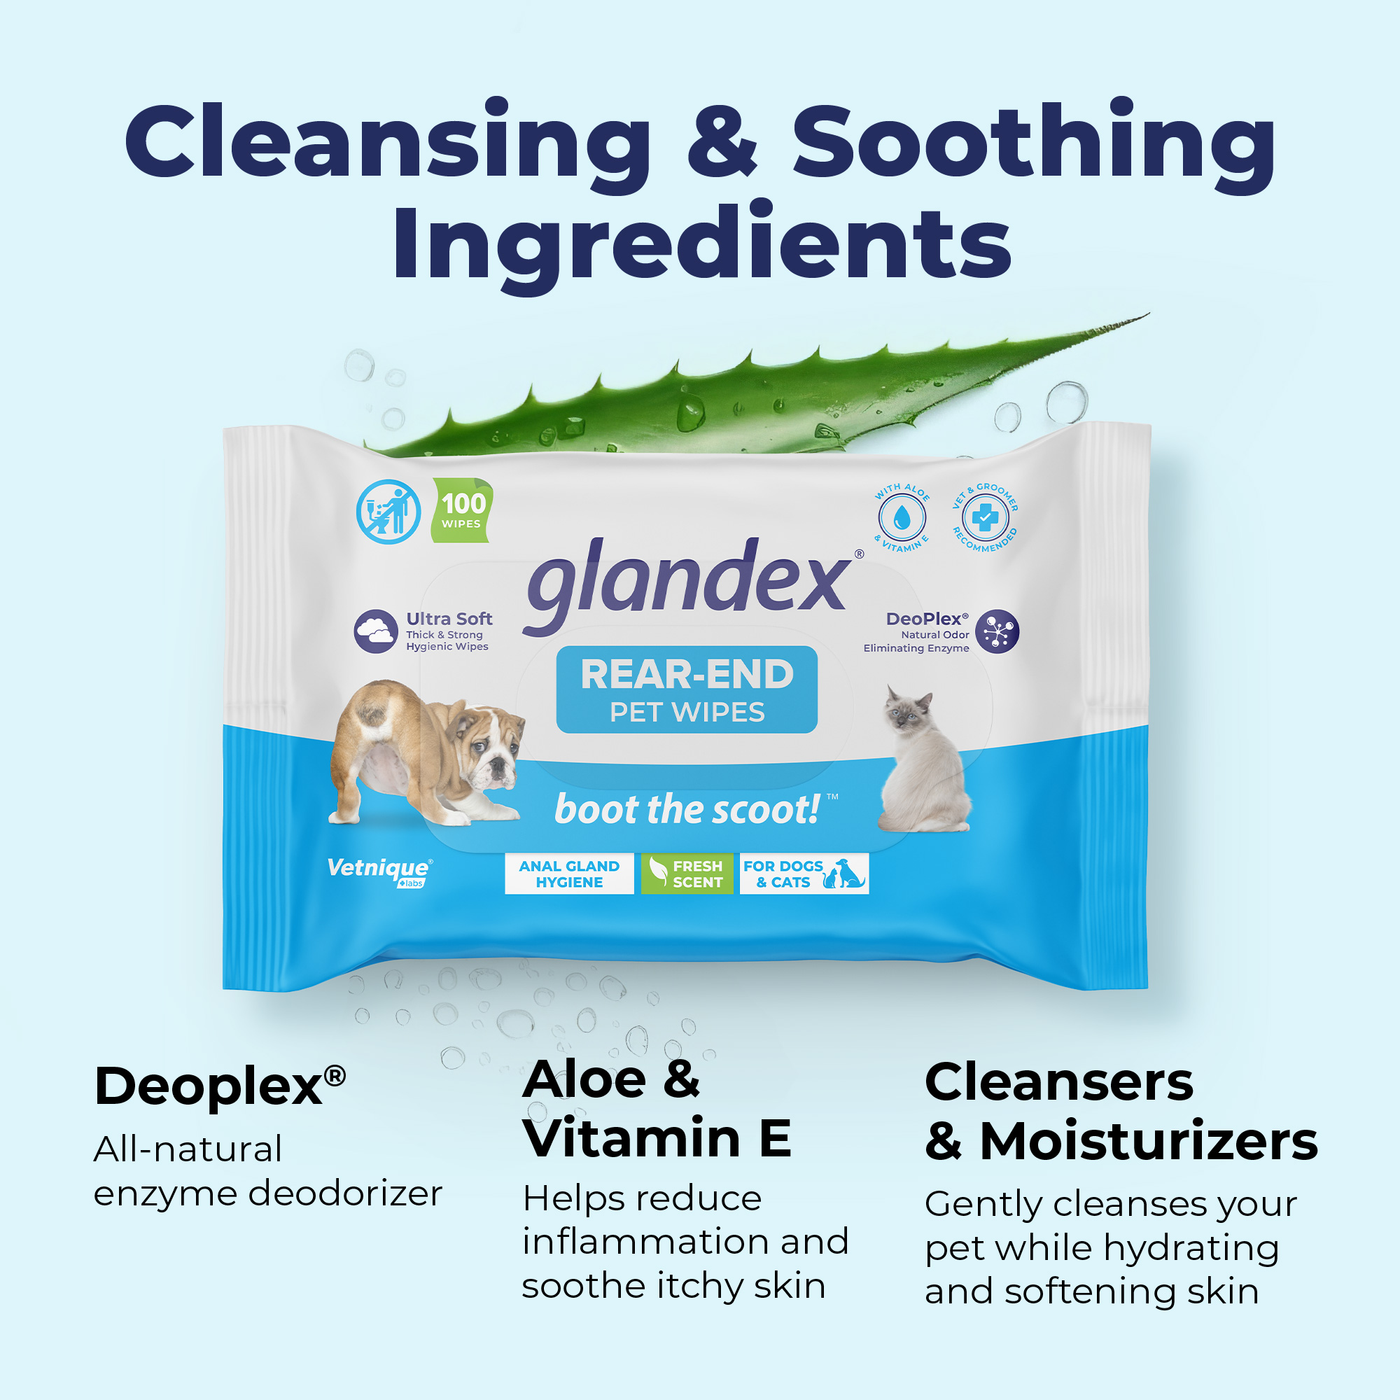 Glandex Rear End Pet Wipes Ingredietns